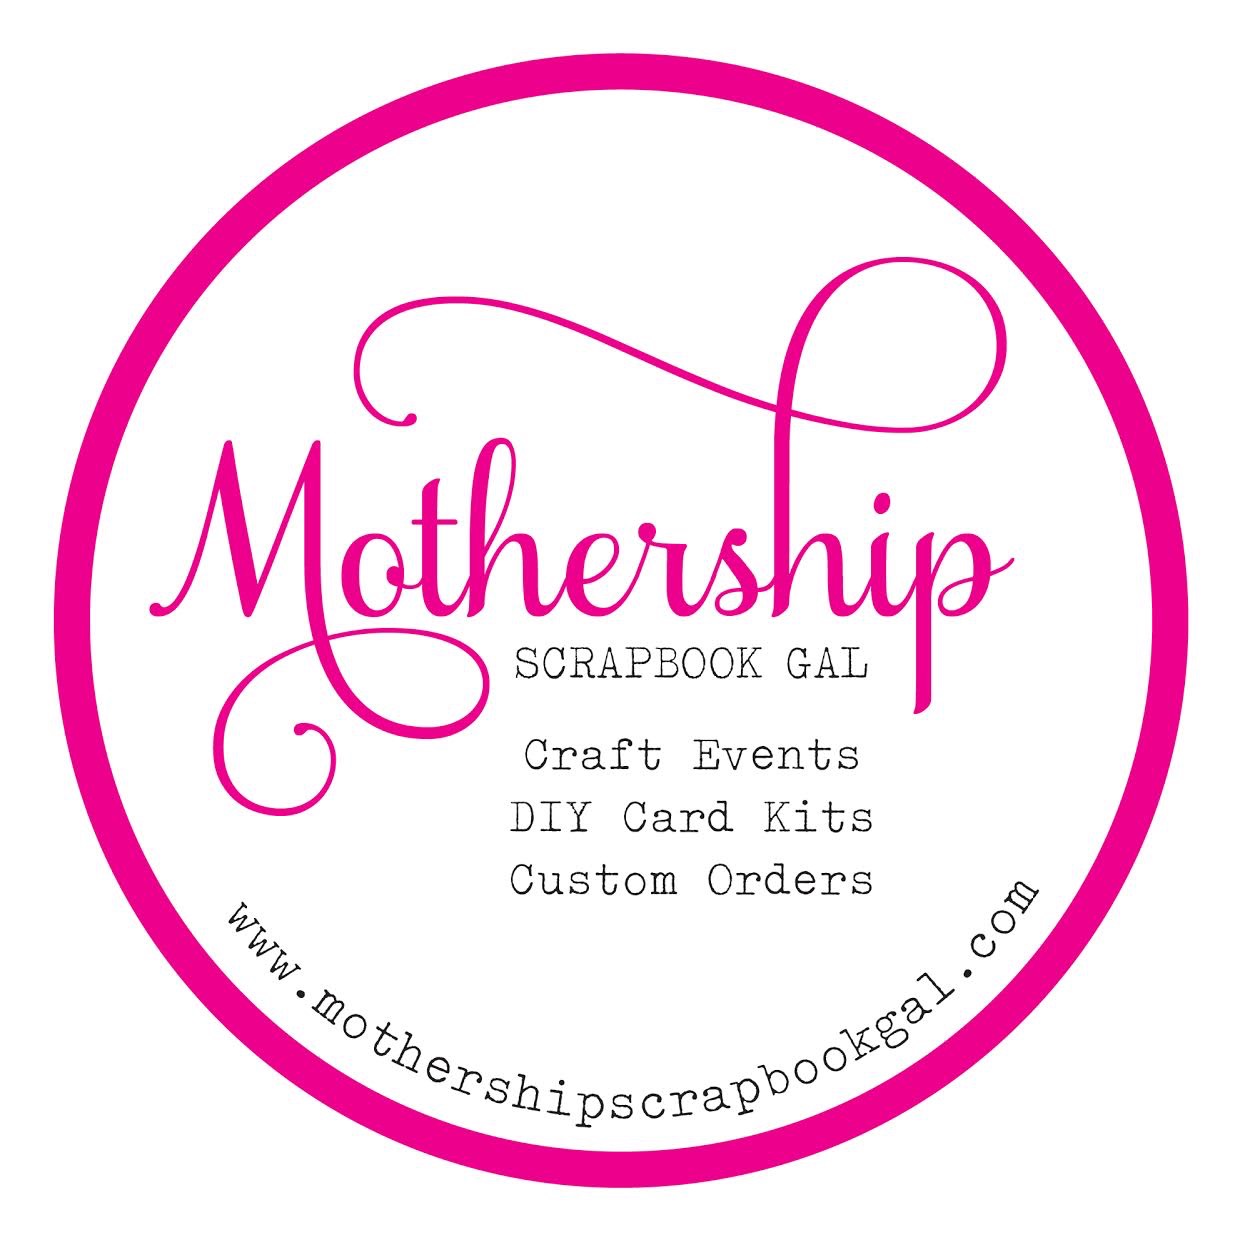 Profile | Mothership Scrapbook Gal